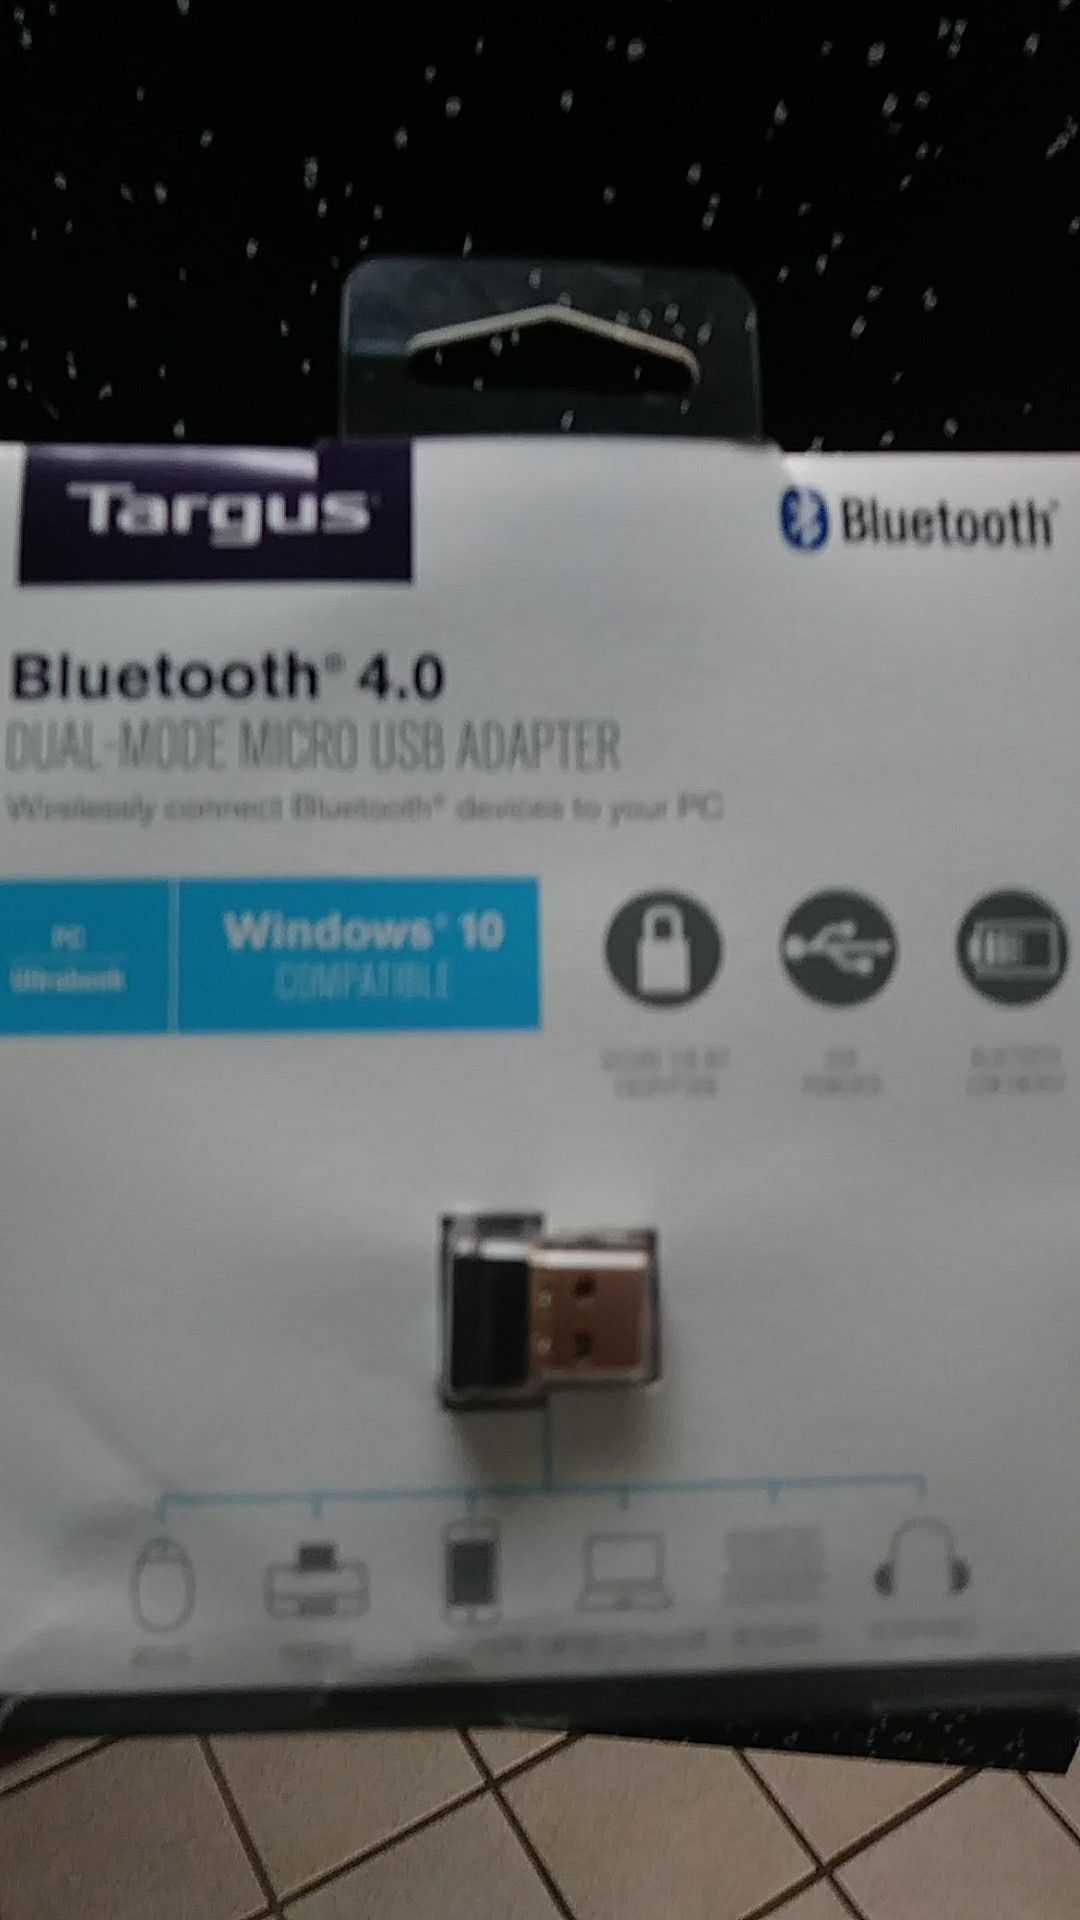 Targus Bluetooth 4.0 dual-mode micro USB adapter